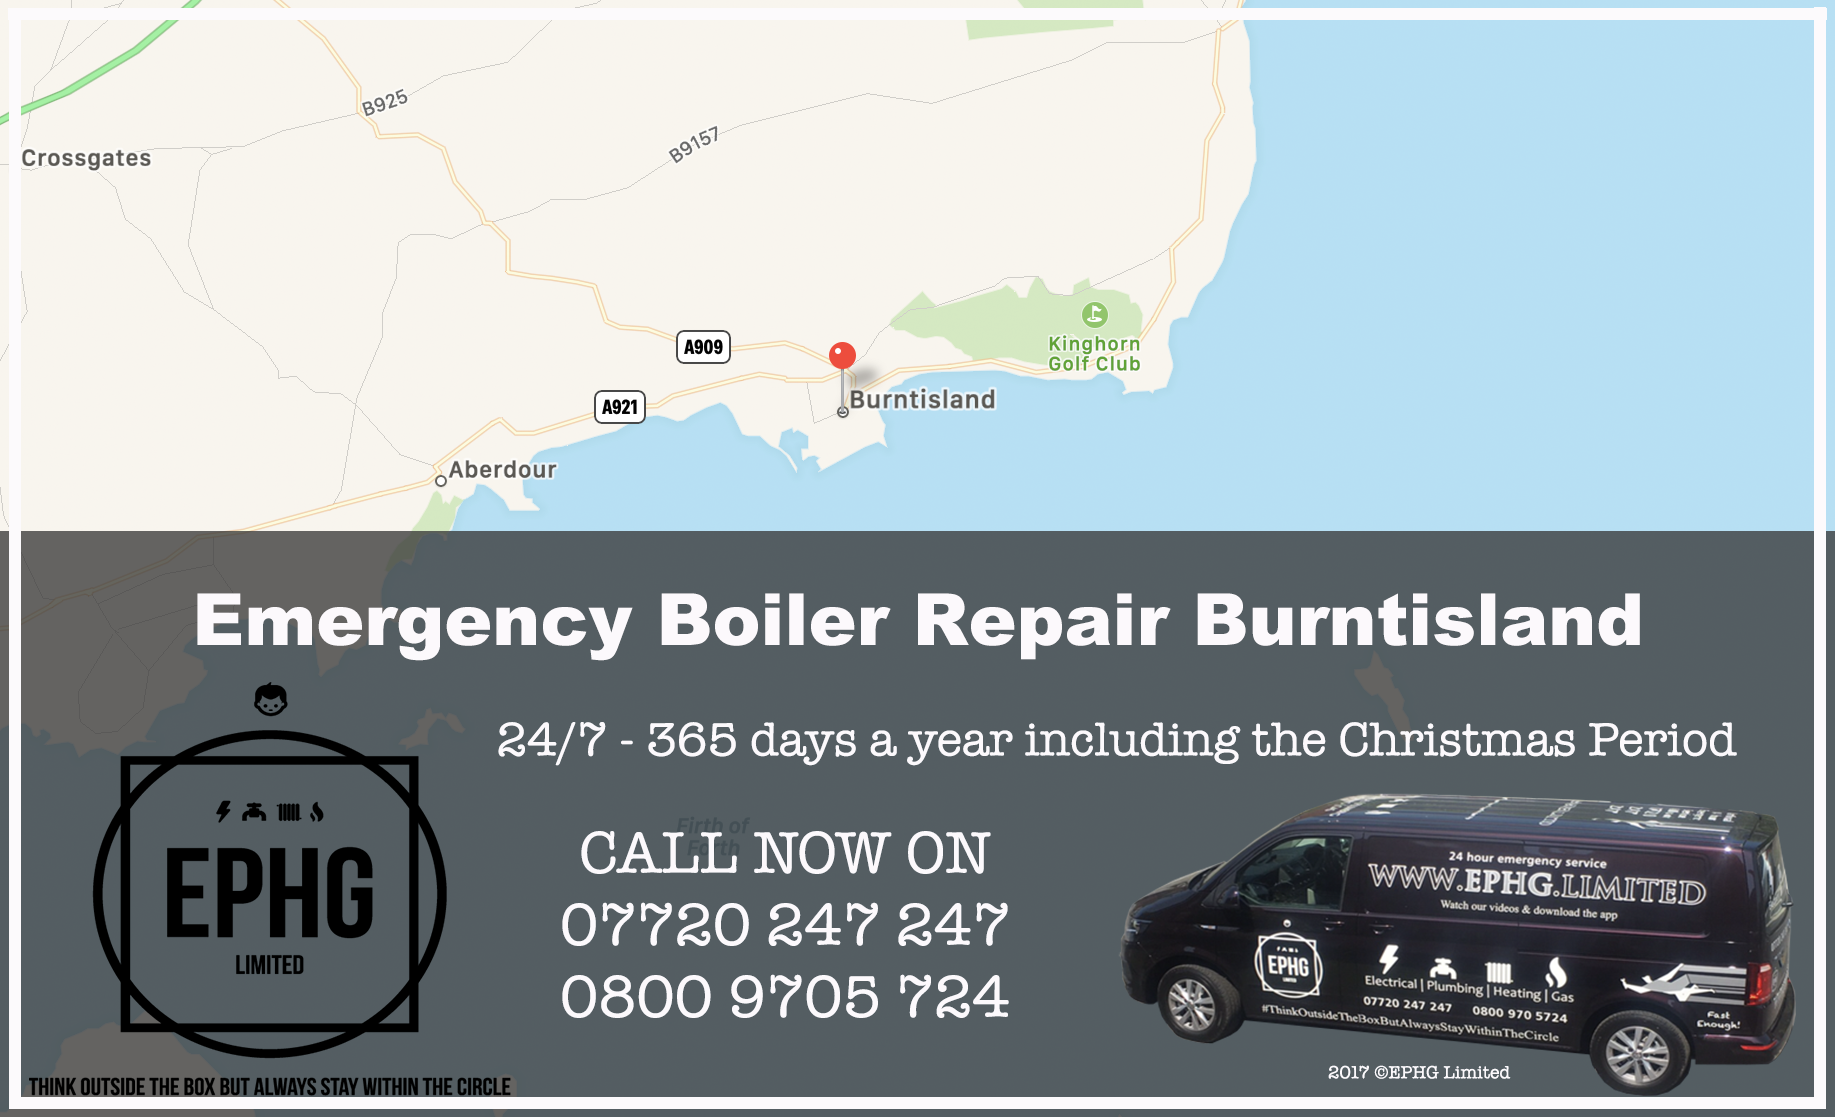 24 Hour Emergency Boiler Repair Burntisland